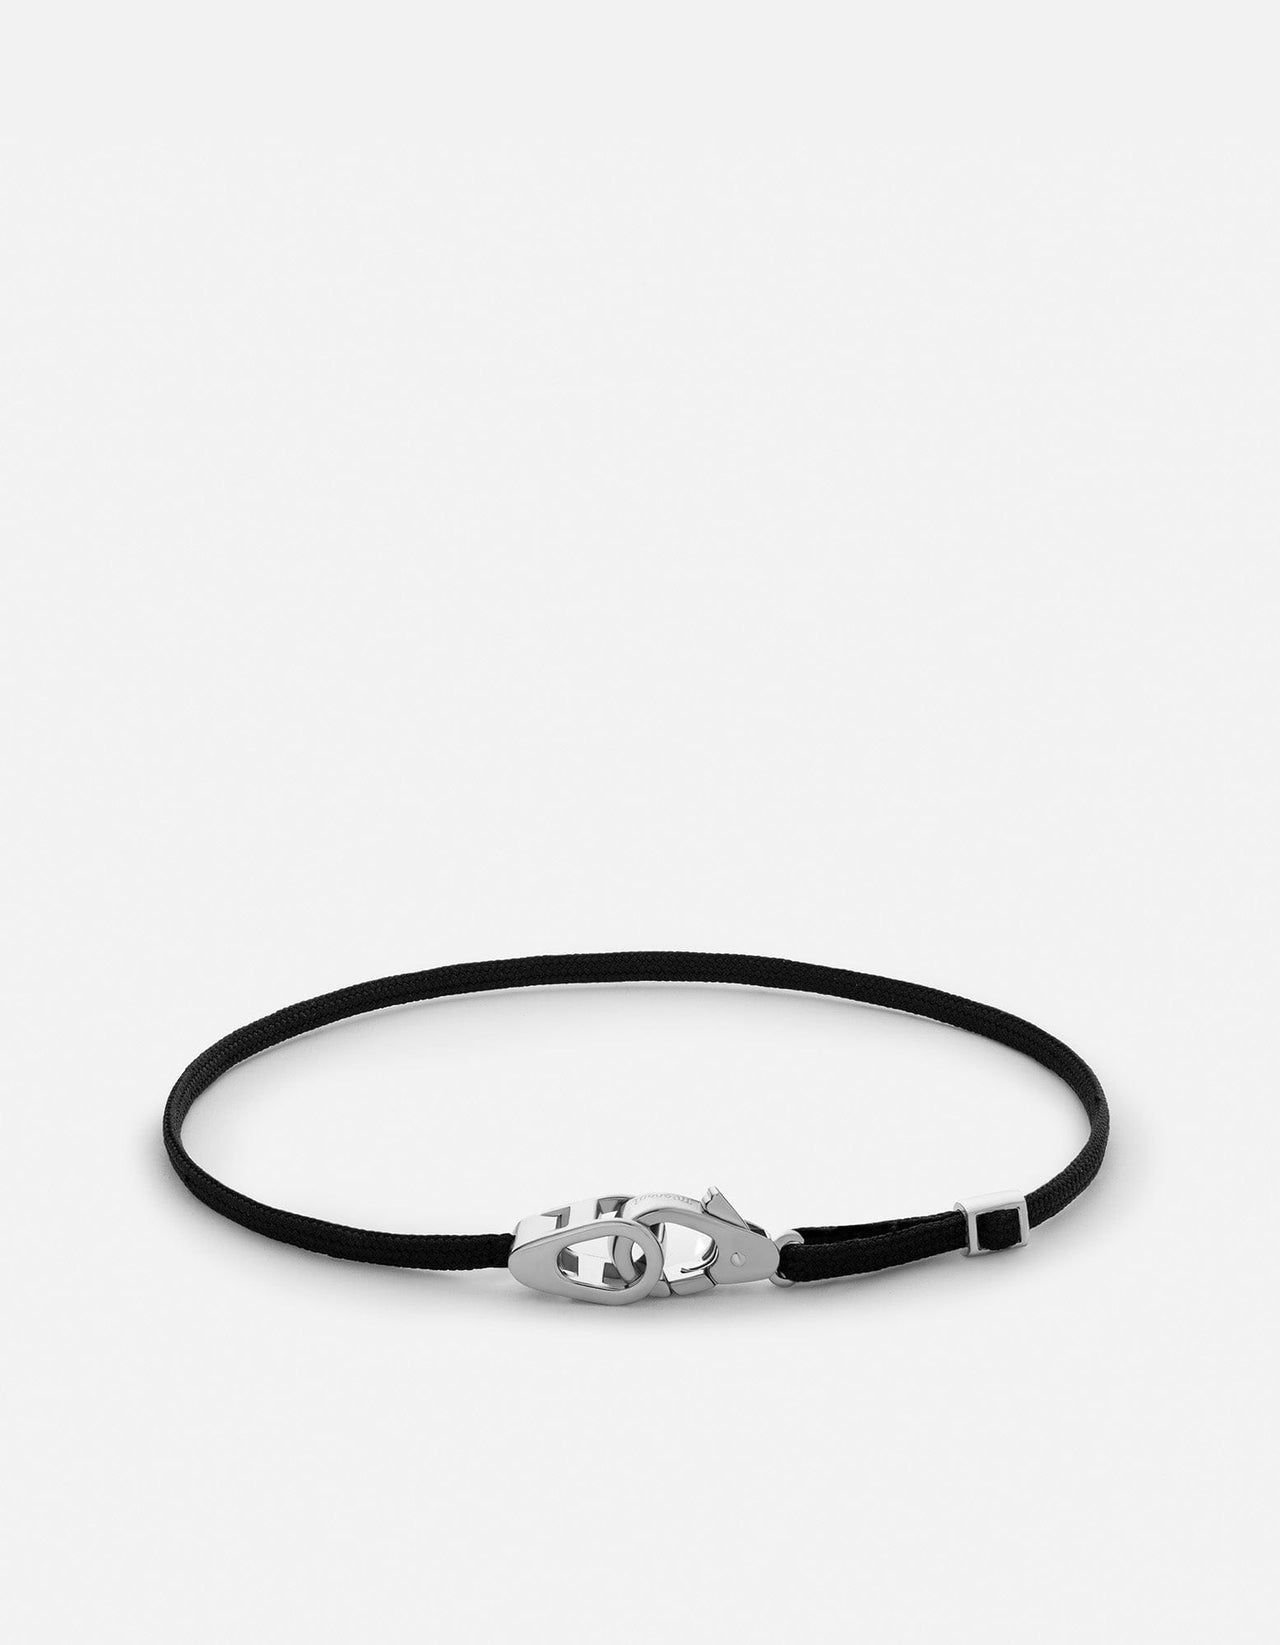 Cartier men's bracelet